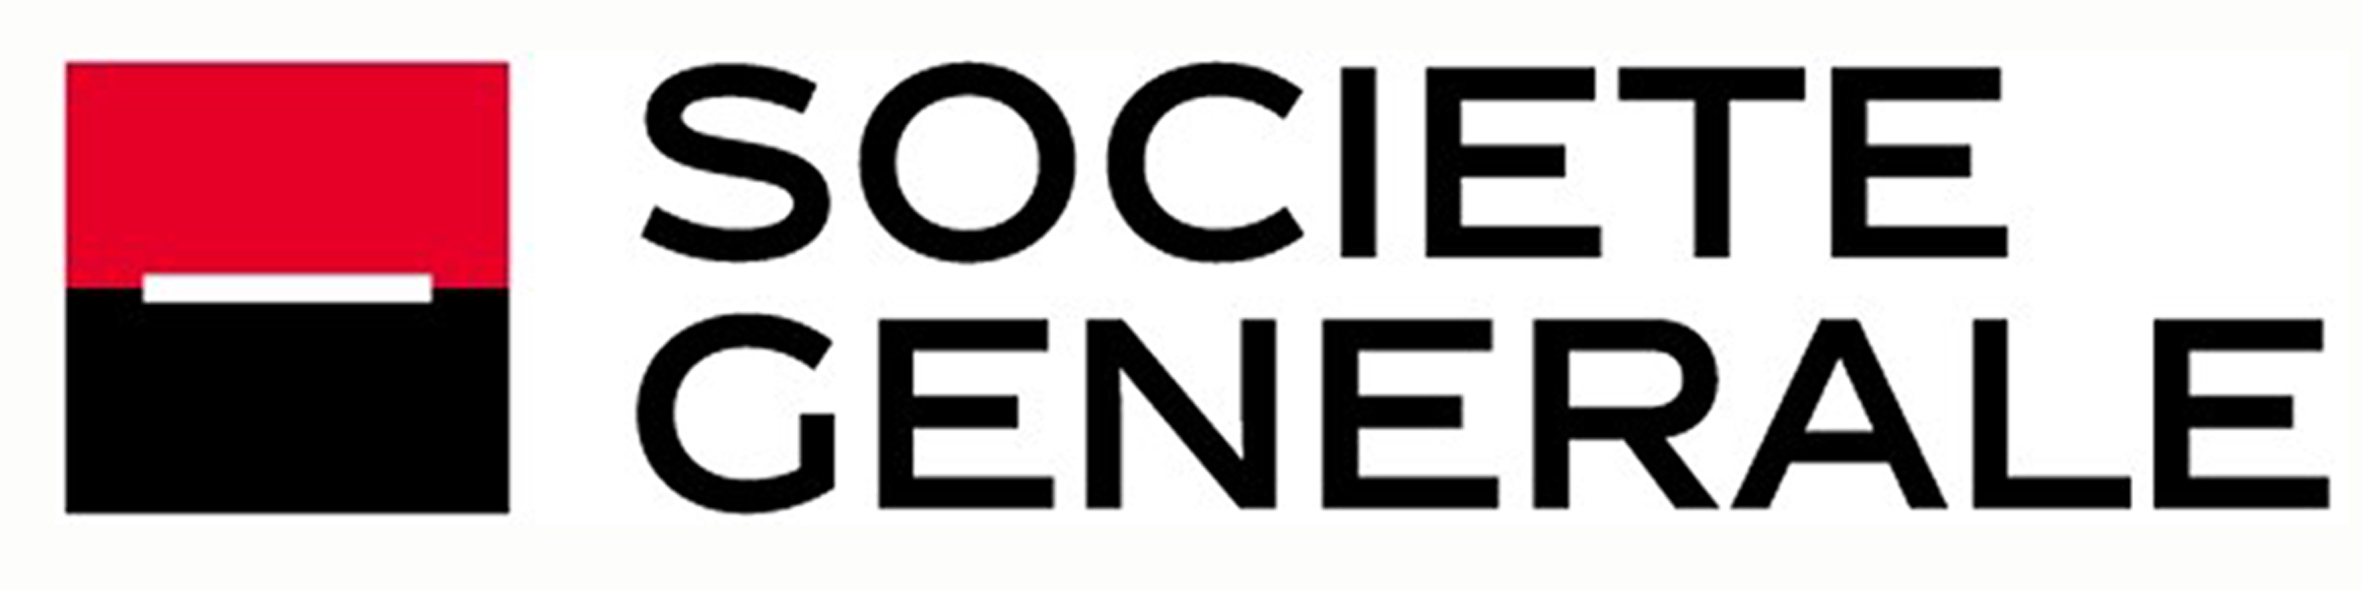 Society Generale logo